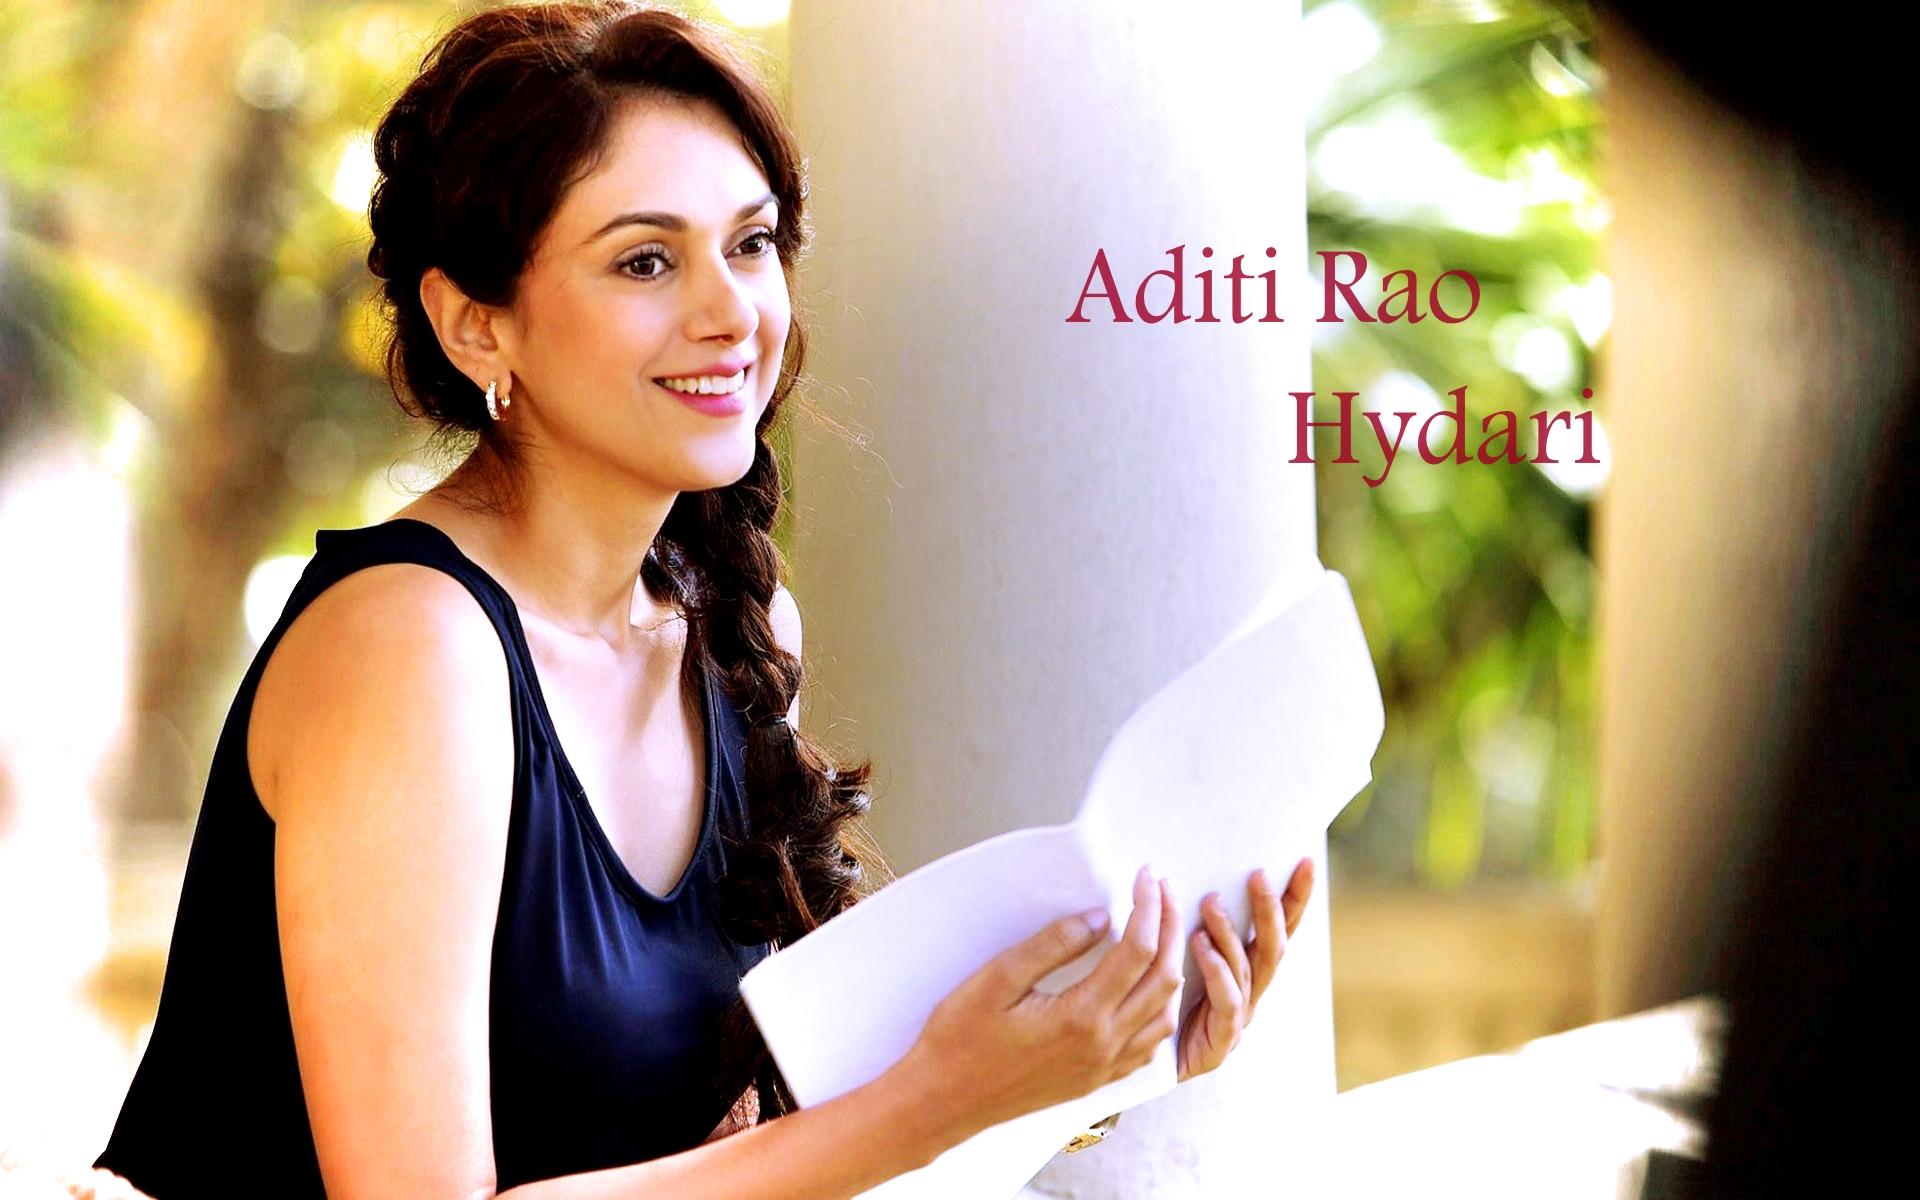 Aditi Name Wallpaper - Aditi Rao Hydari Murder 3 , HD Wallpaper & Backgrounds